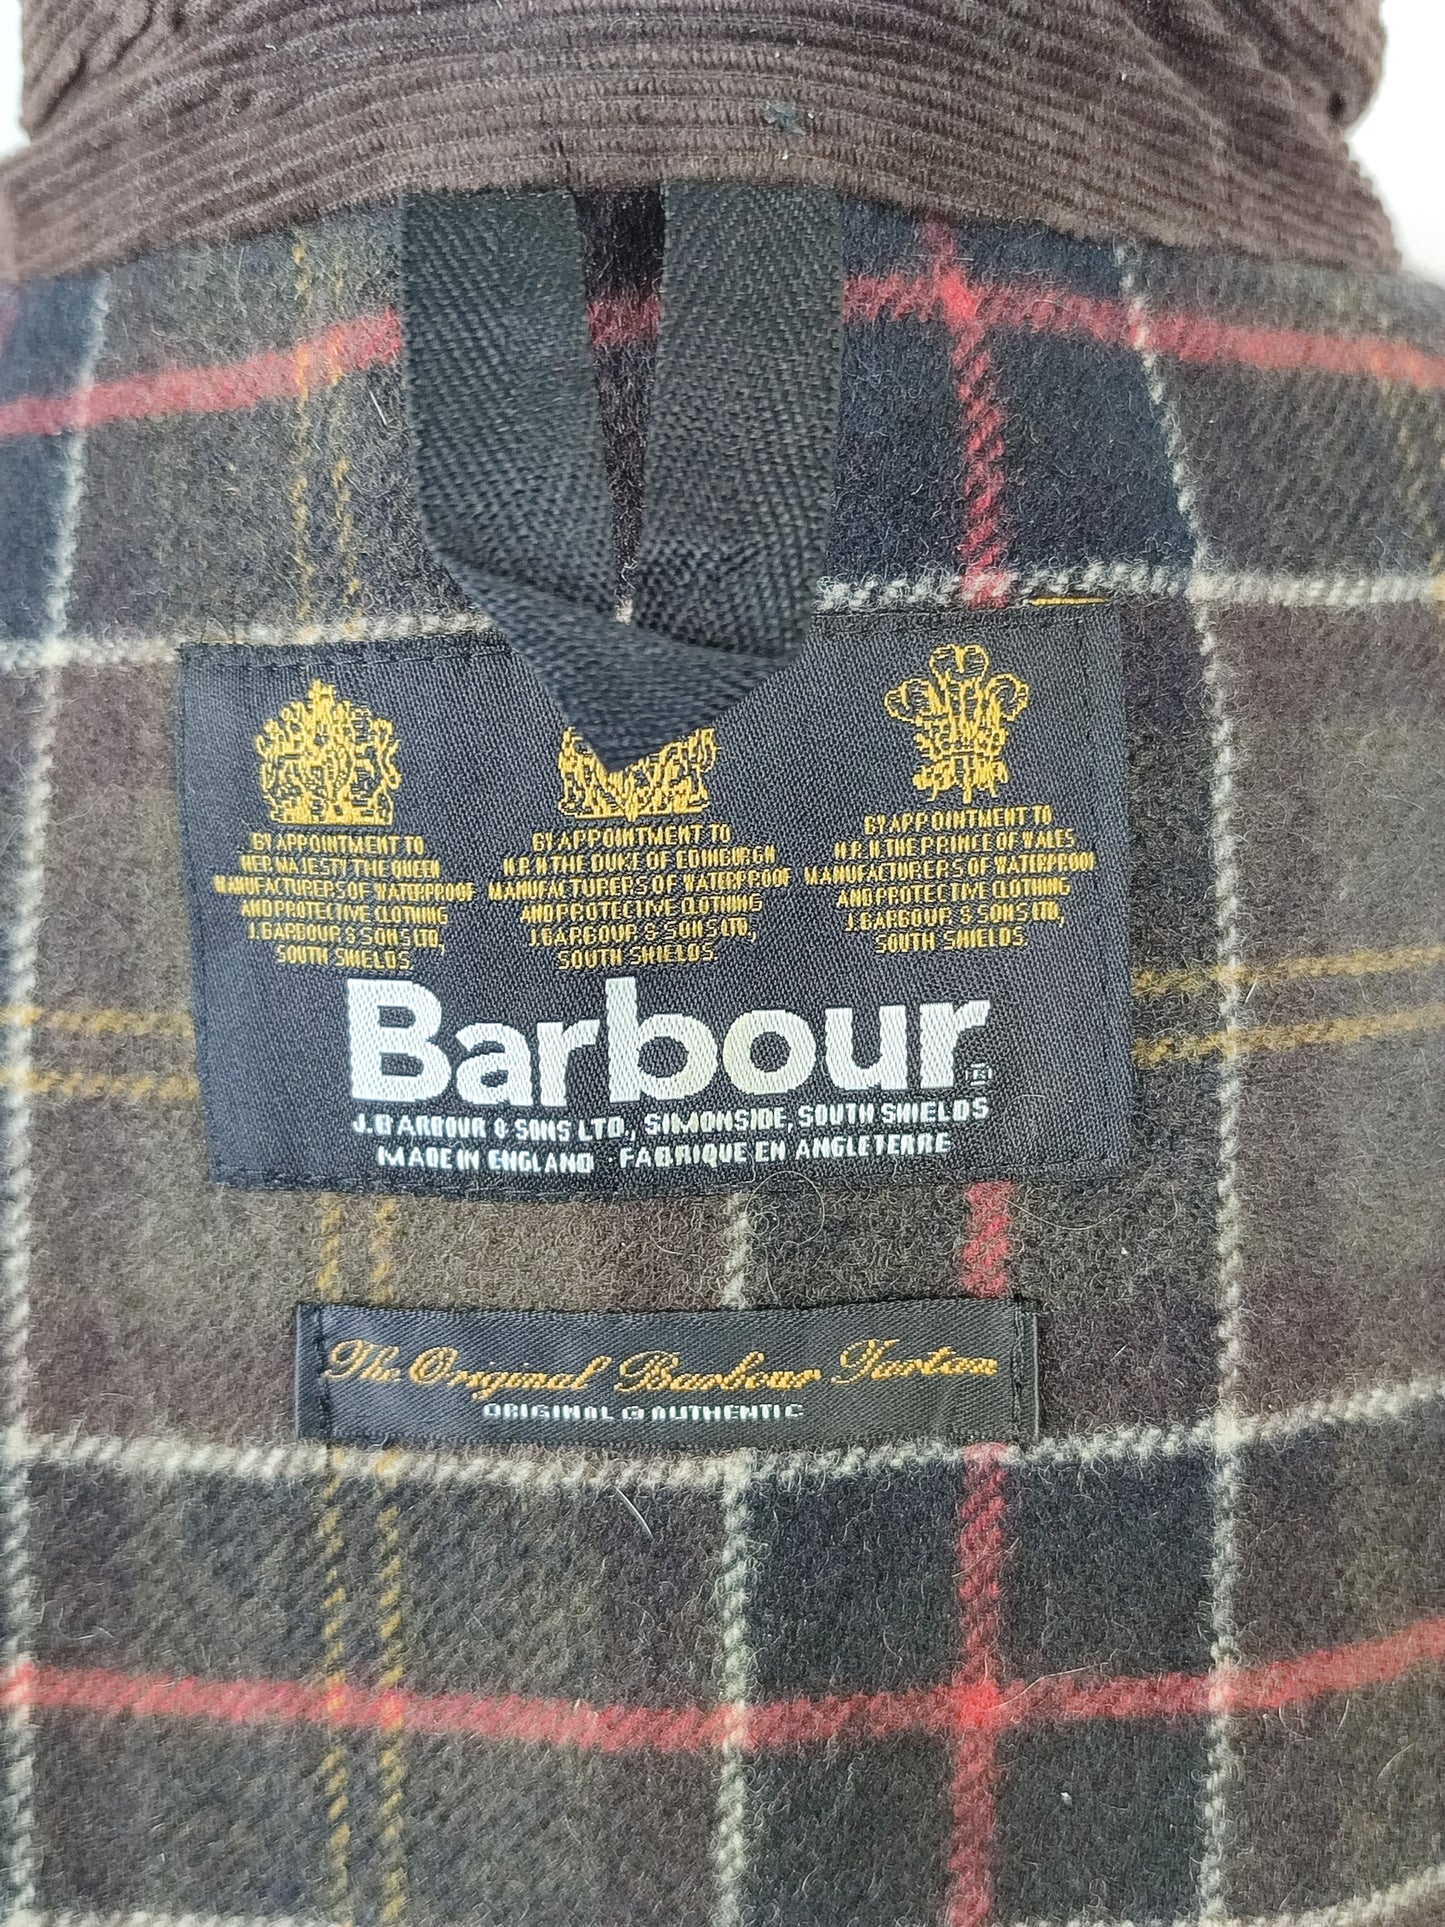 Giacca Barbour Beige cerato Newmarket cerato UNISEX Tg.46 Beige Wax Coat size UK16